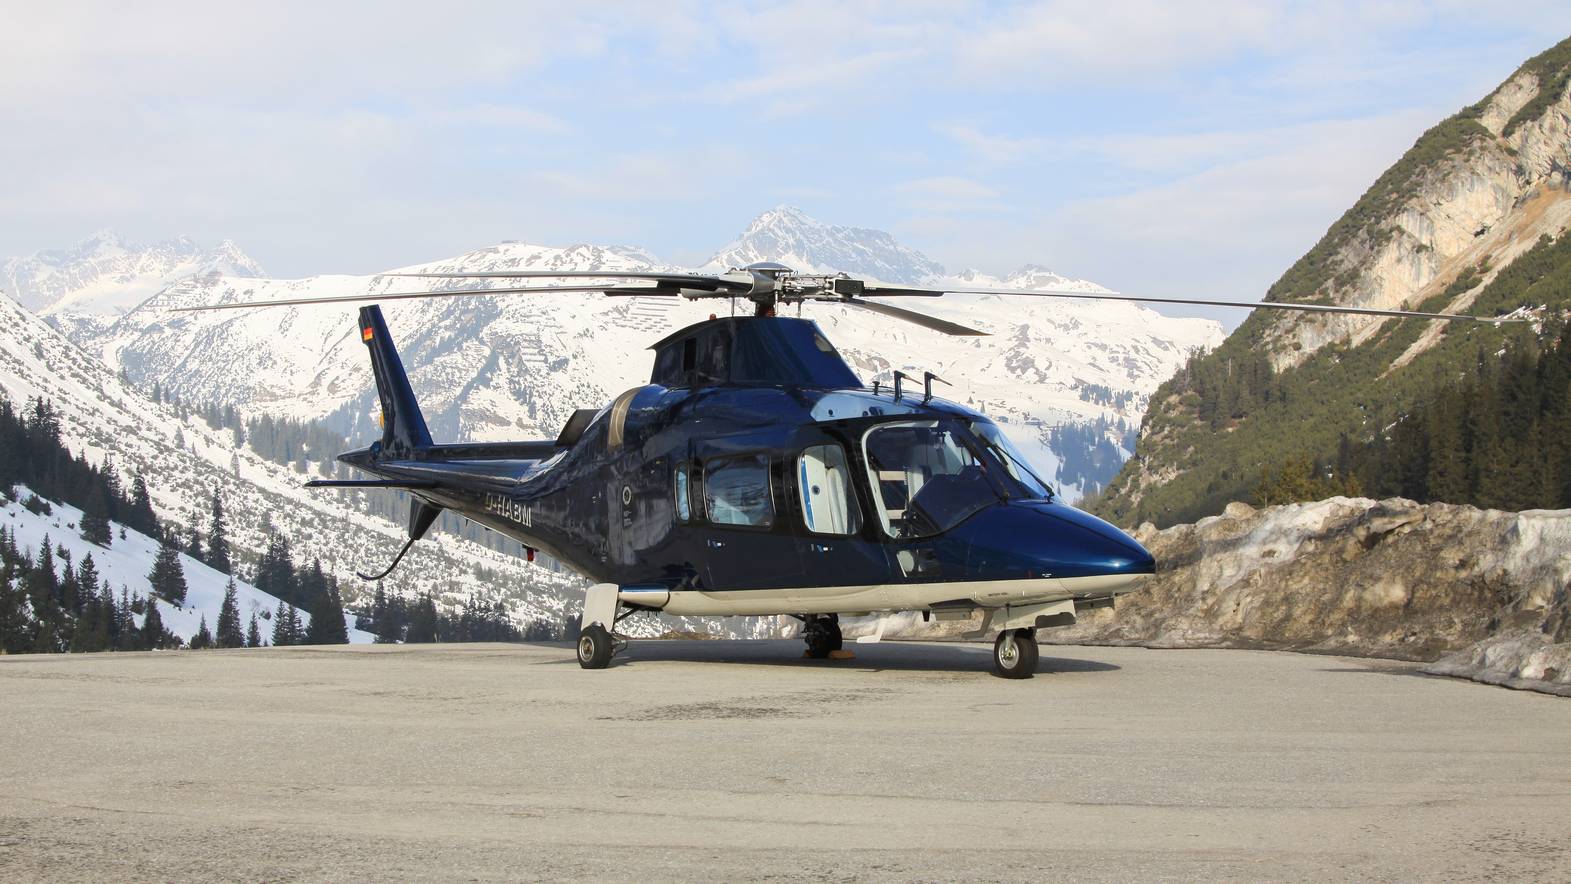 Agusta A109 Geneva - Zermatt helicopter flights